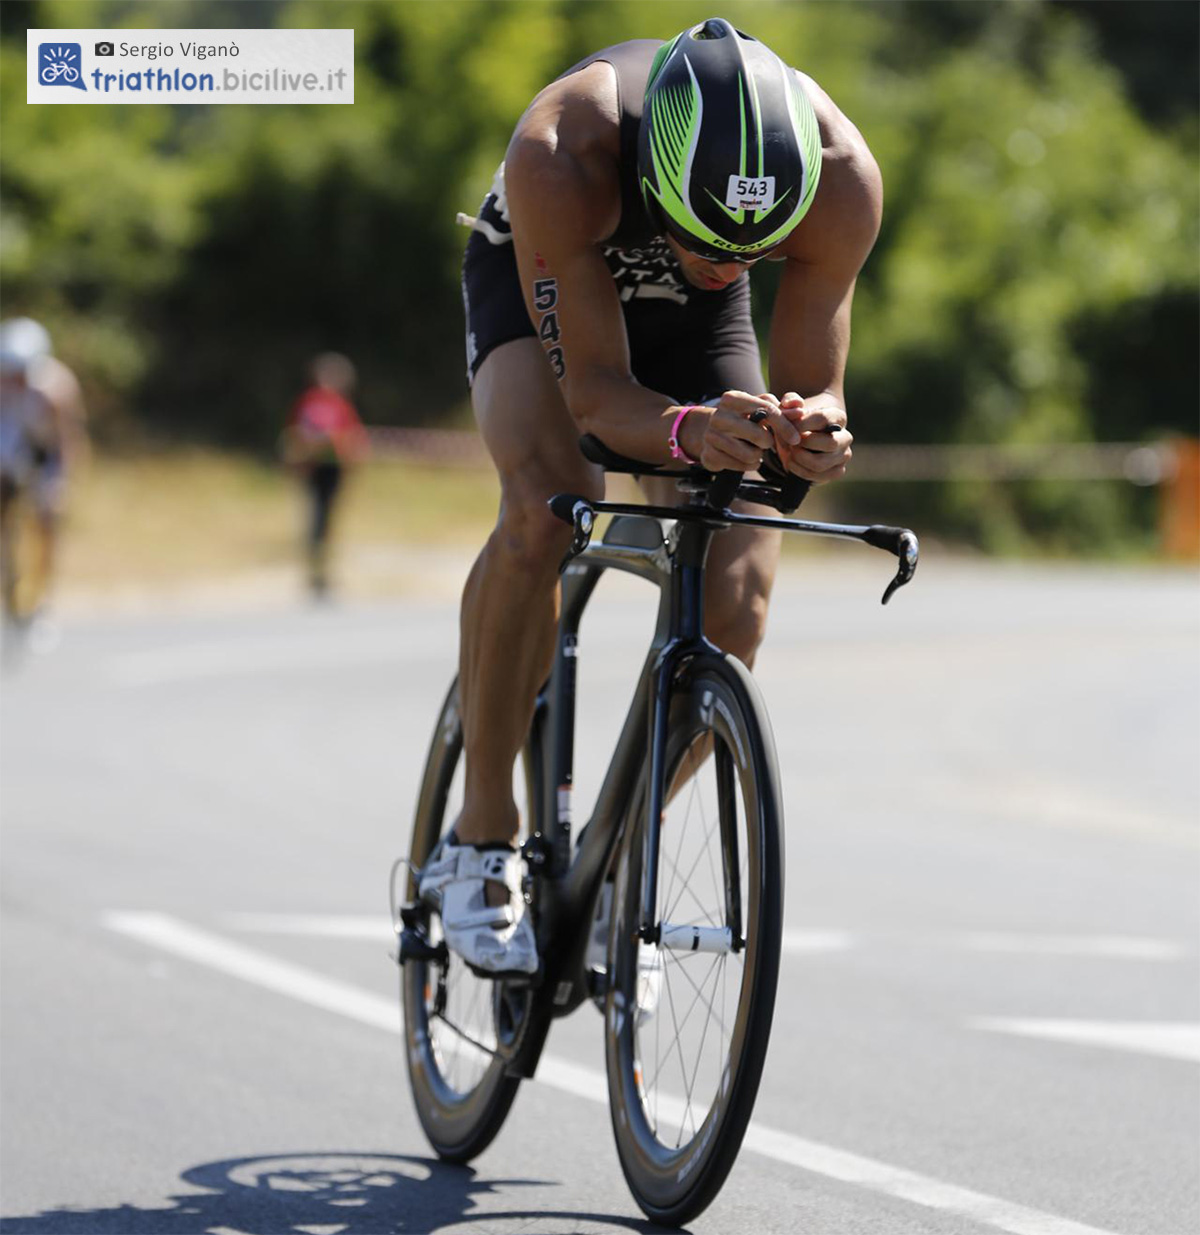 L'atleta Sergio Viganò in sella ad una bici da triathlon durante una gara